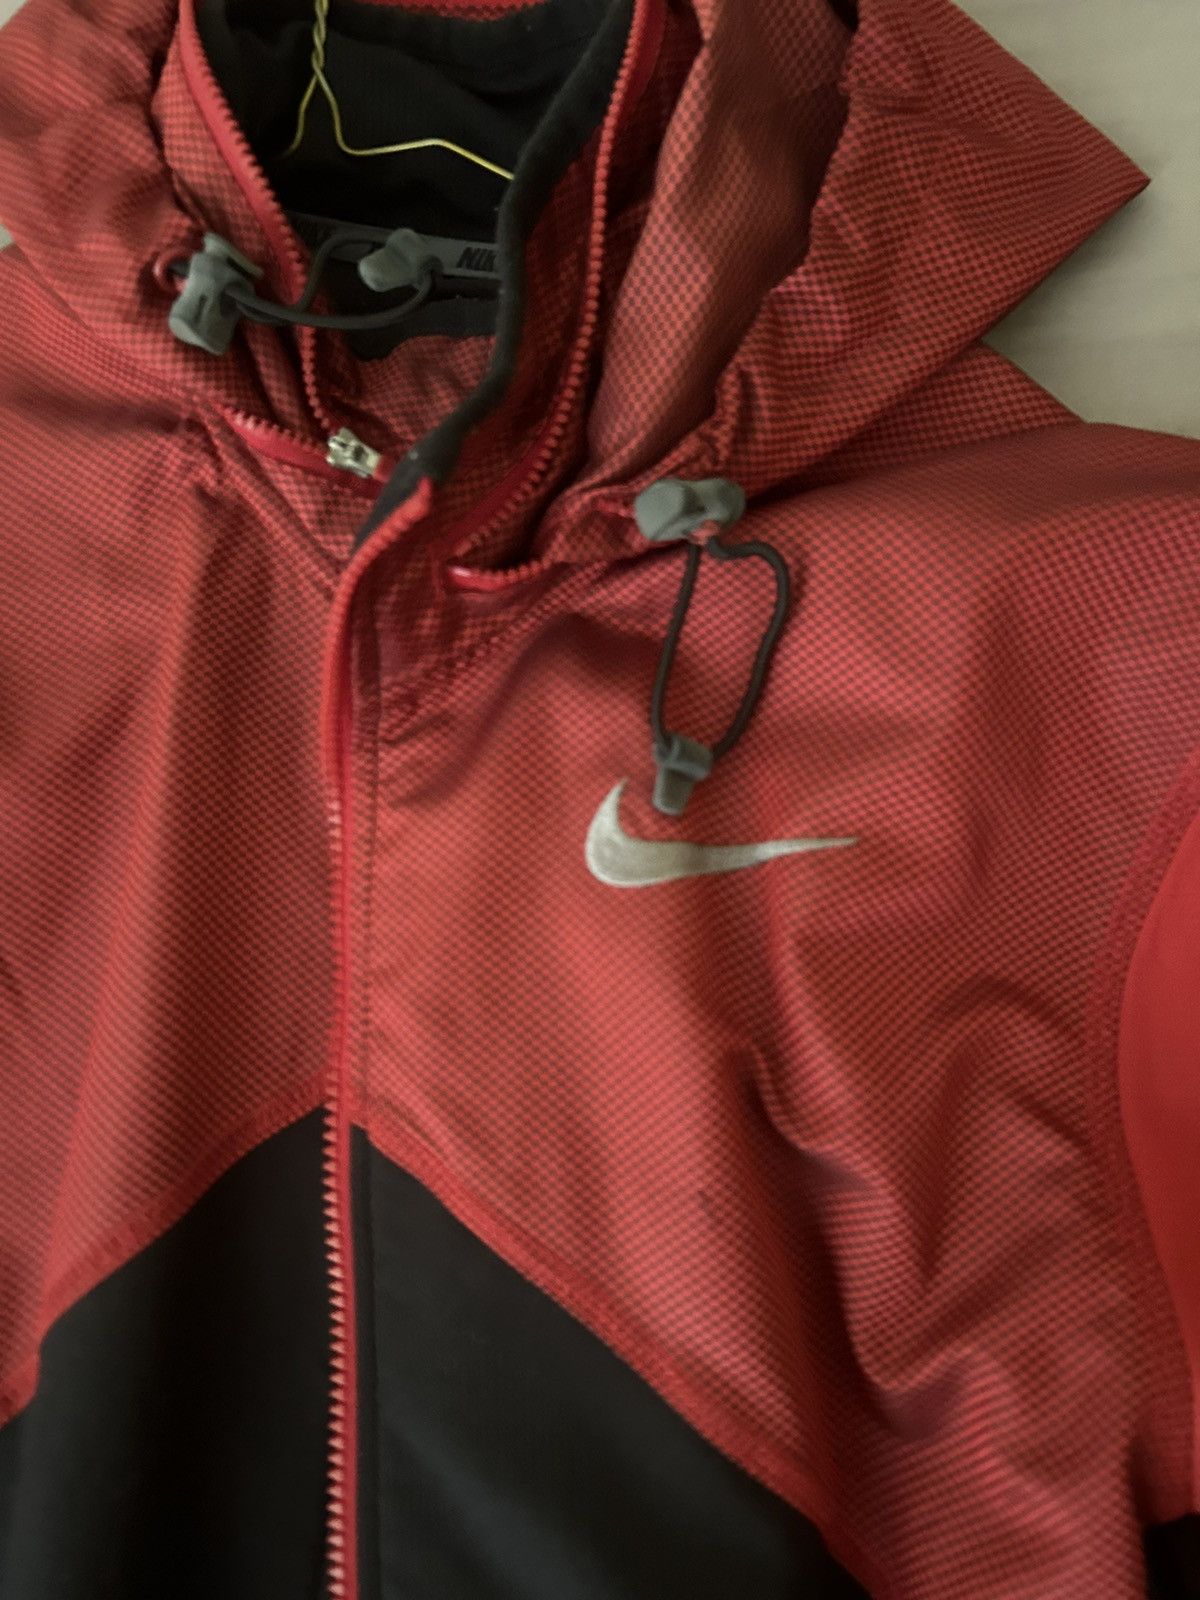 Nike Nike Windbreaker Jacket Size US M / EU 48-50 / 2 - 2 Preview